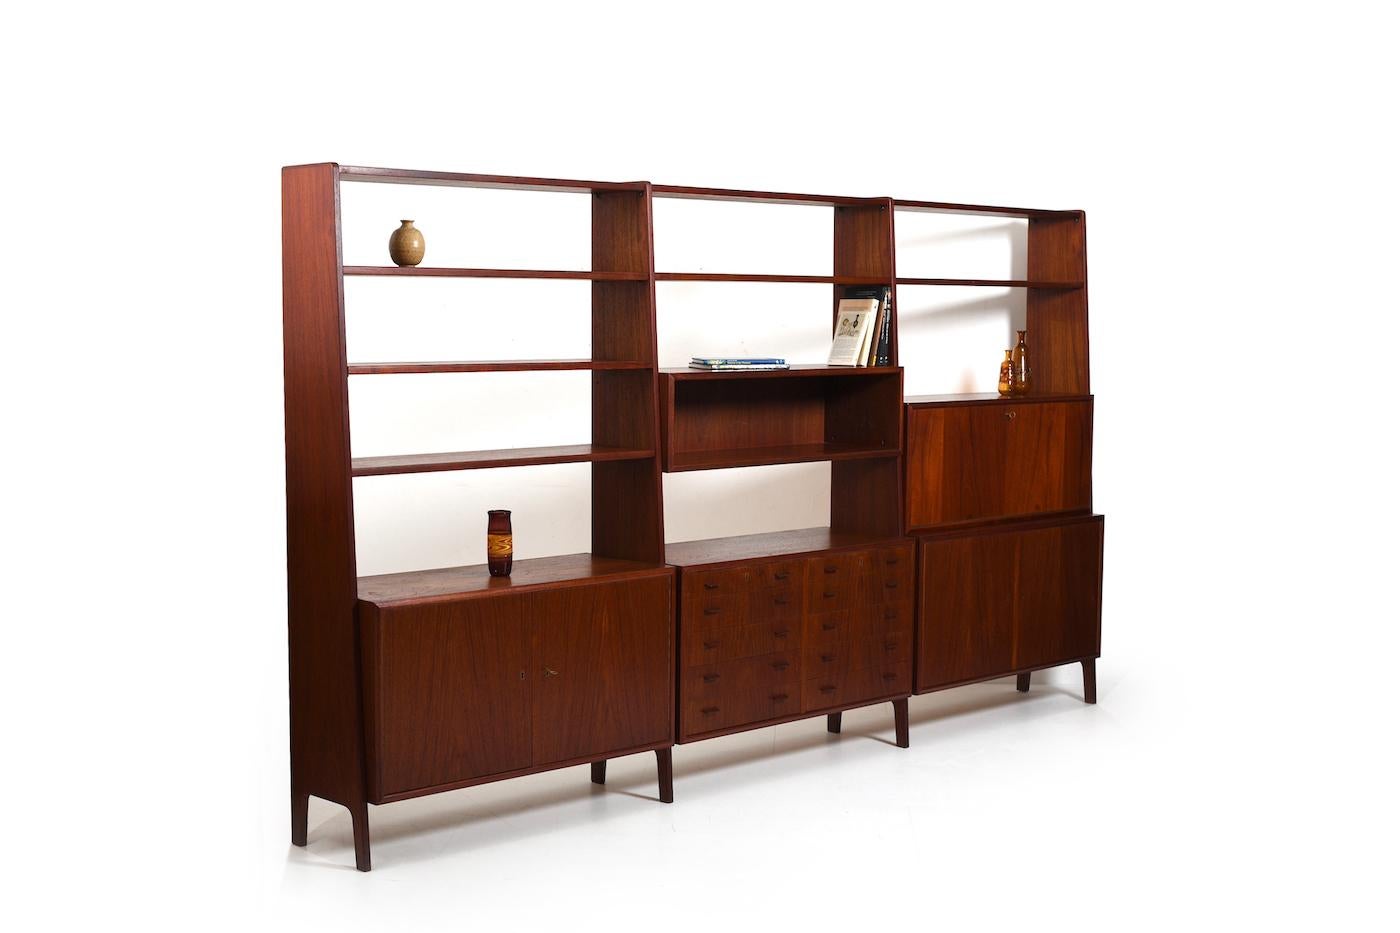 Mid-Century Modern Danish Freestanding Teak Shelf System 1950s with Cabinets For Sale